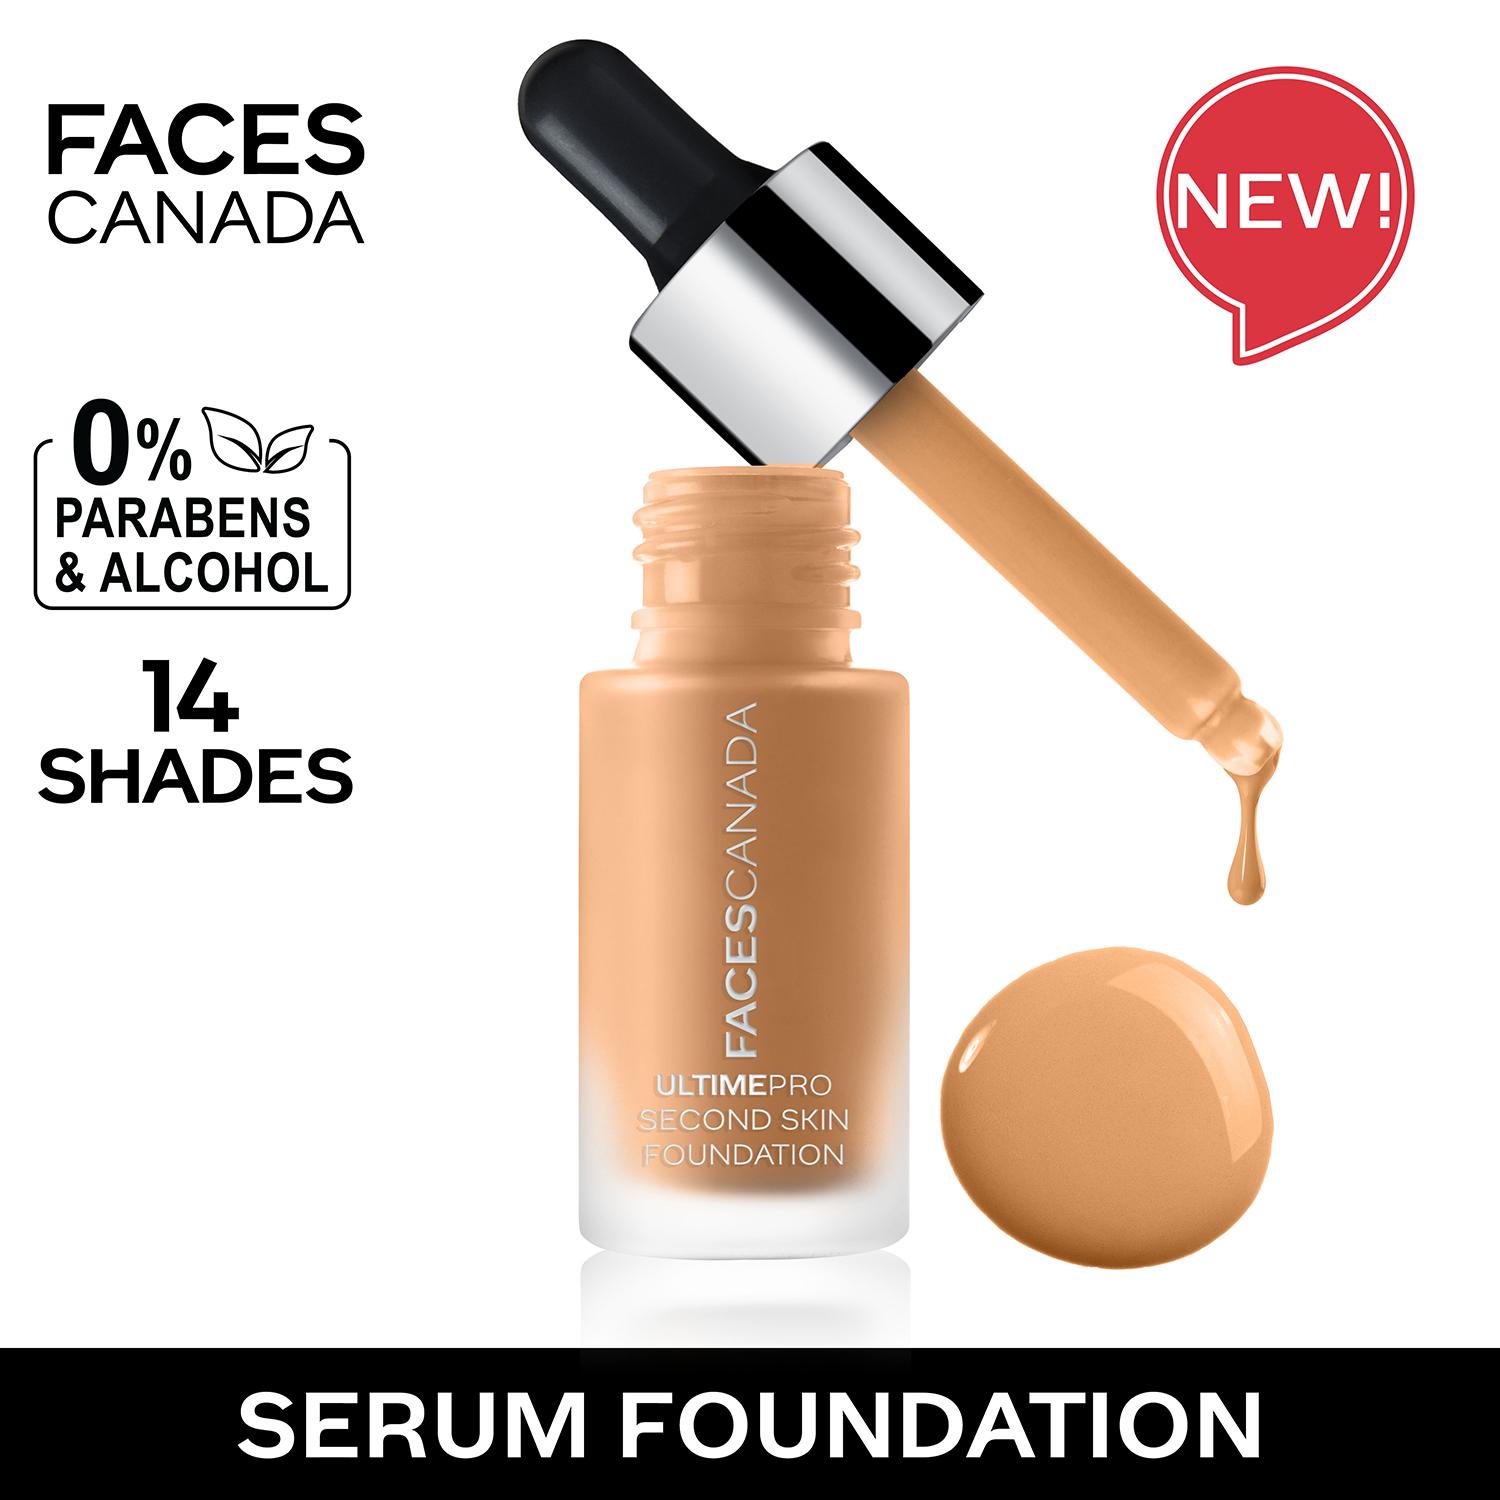 Faces Canada | Faces Canada Ultime Pro Second Skin Foundation - Medium Natural 022, Matte Finish, SPF 15 (15 ml)